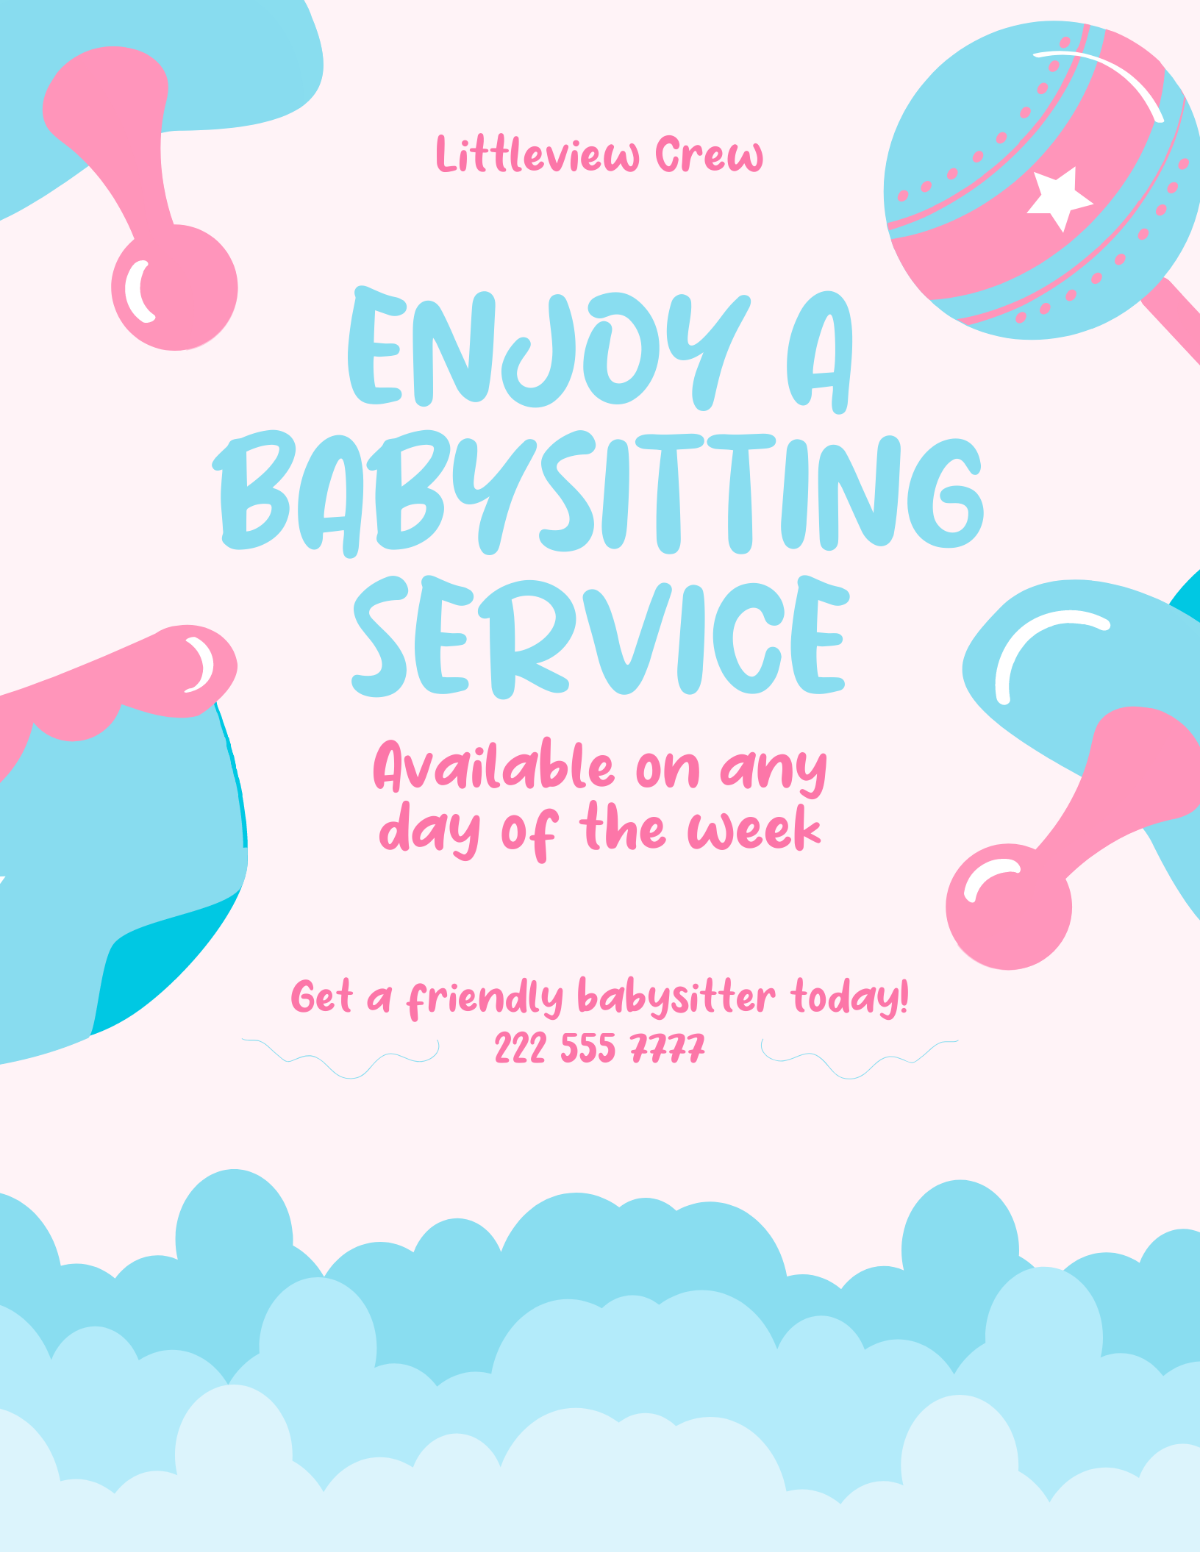 Babysitting Service Flyer Template